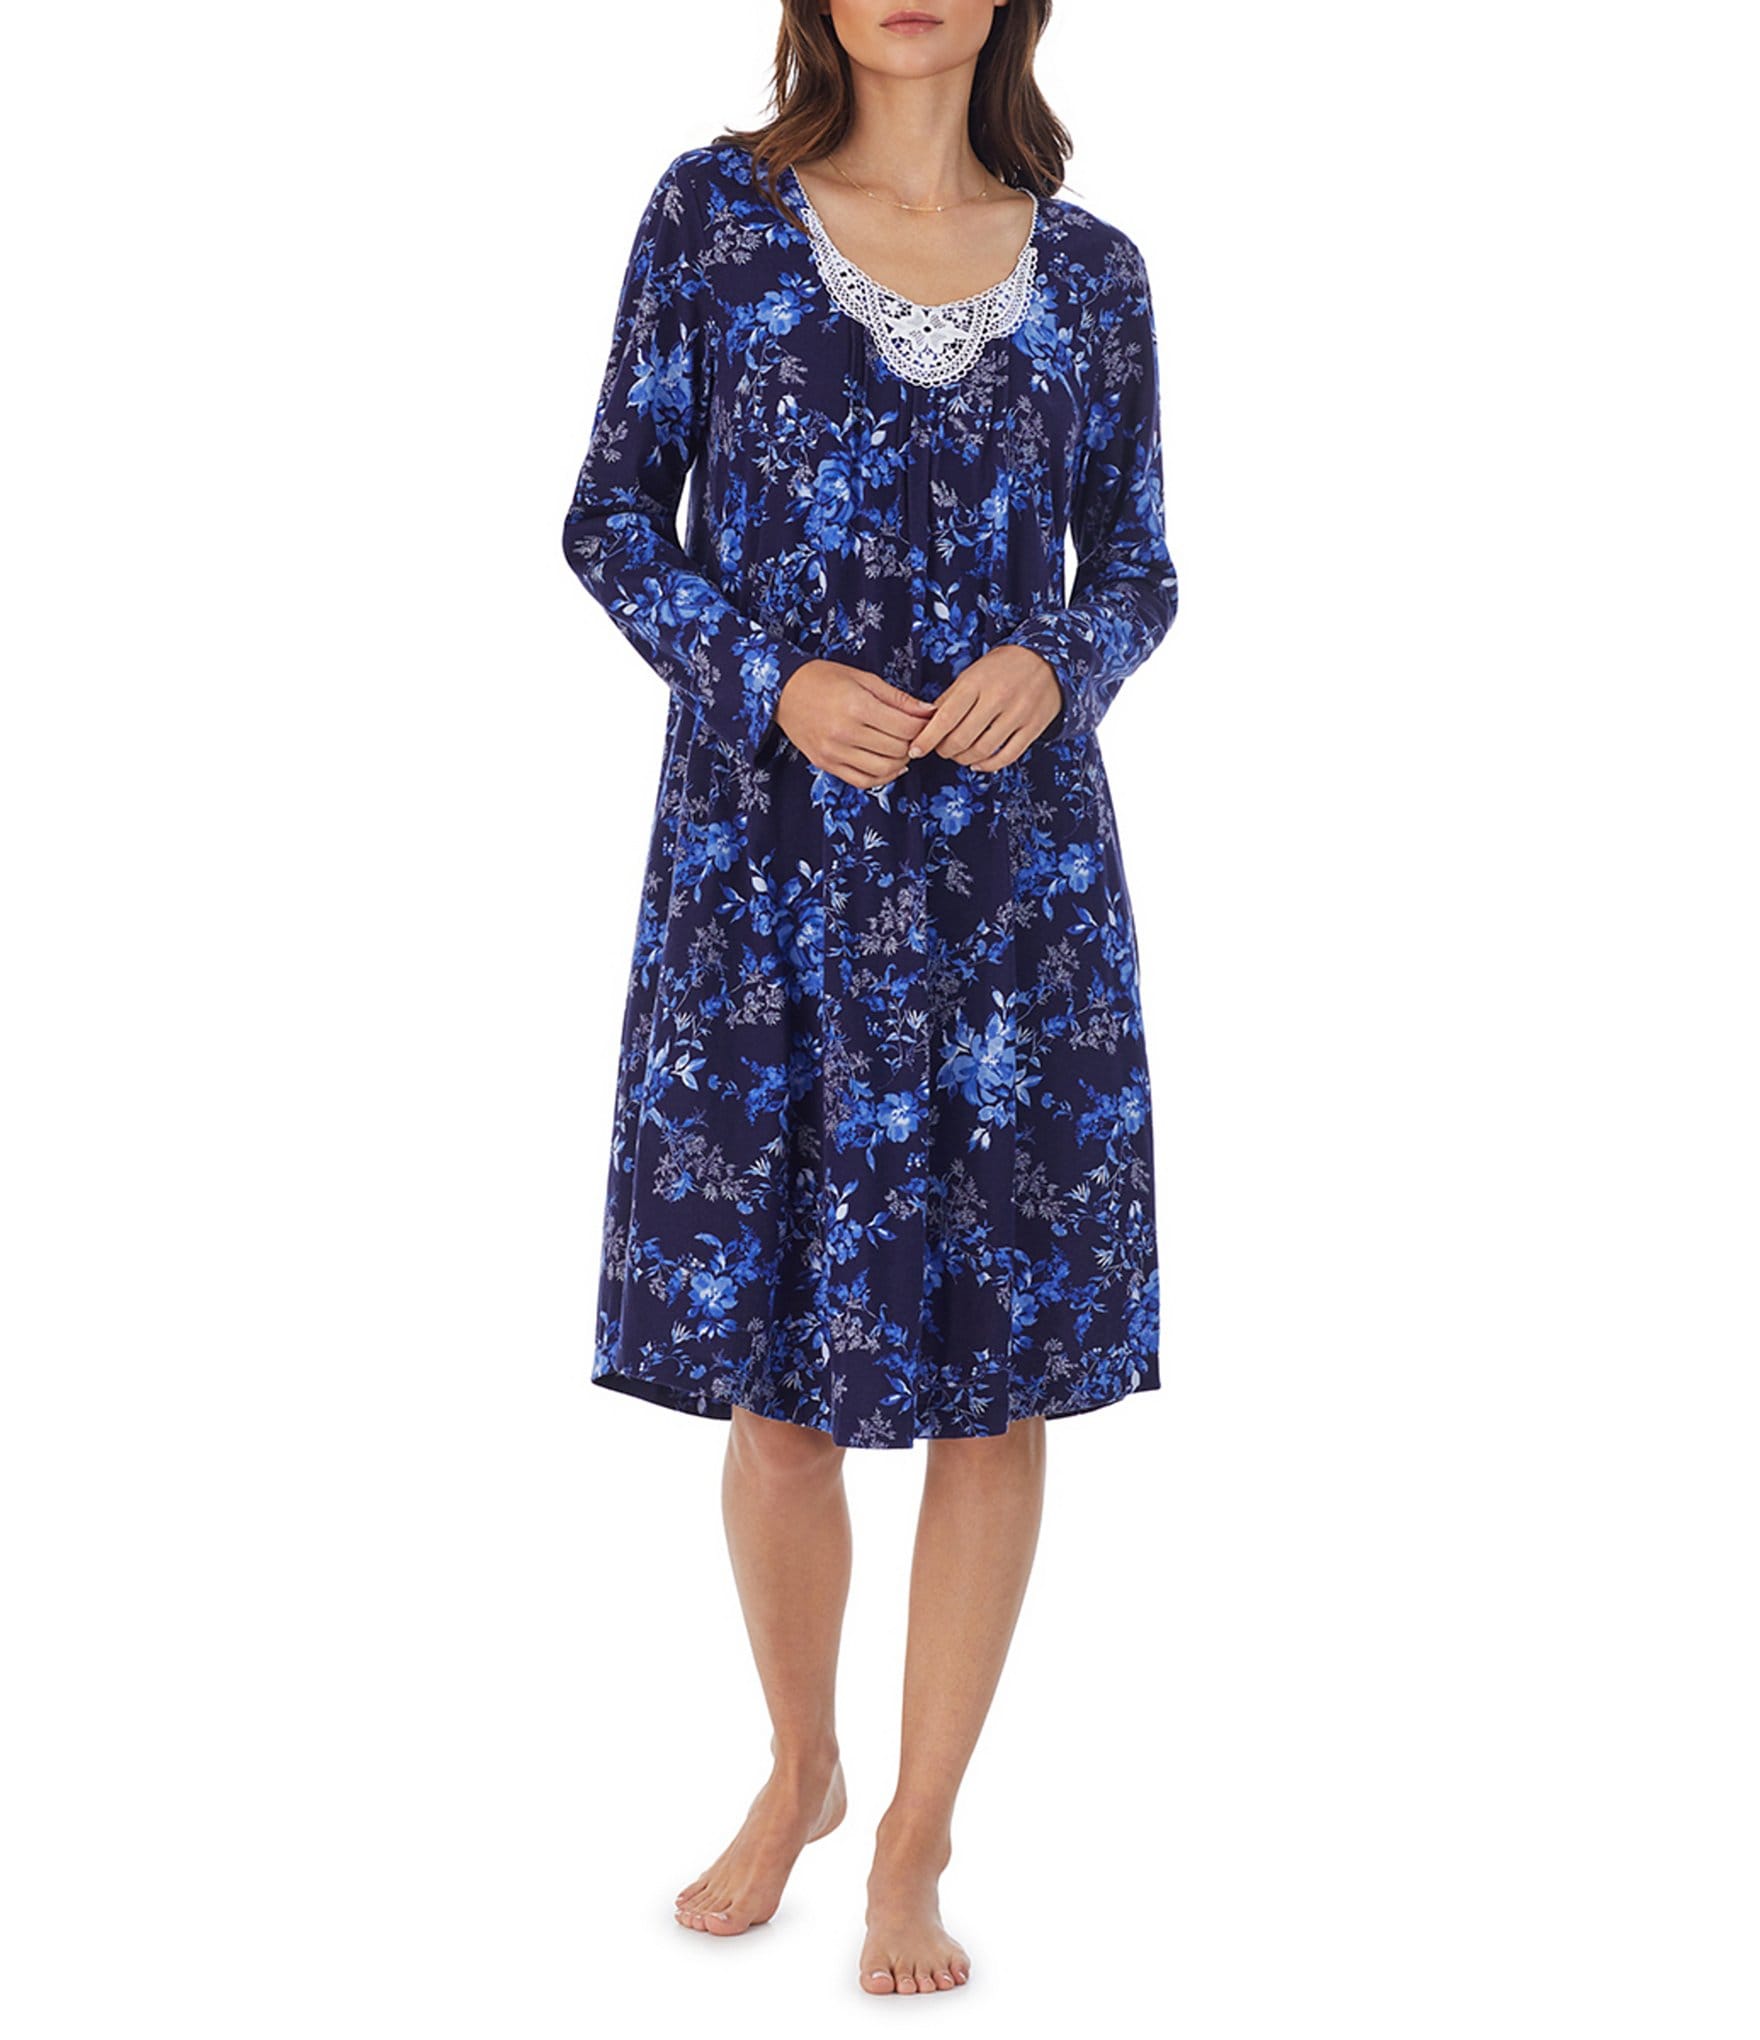 Nottibianche V-Neck Short Sleeve Jersey Knit Side Slit Solid Nightgown